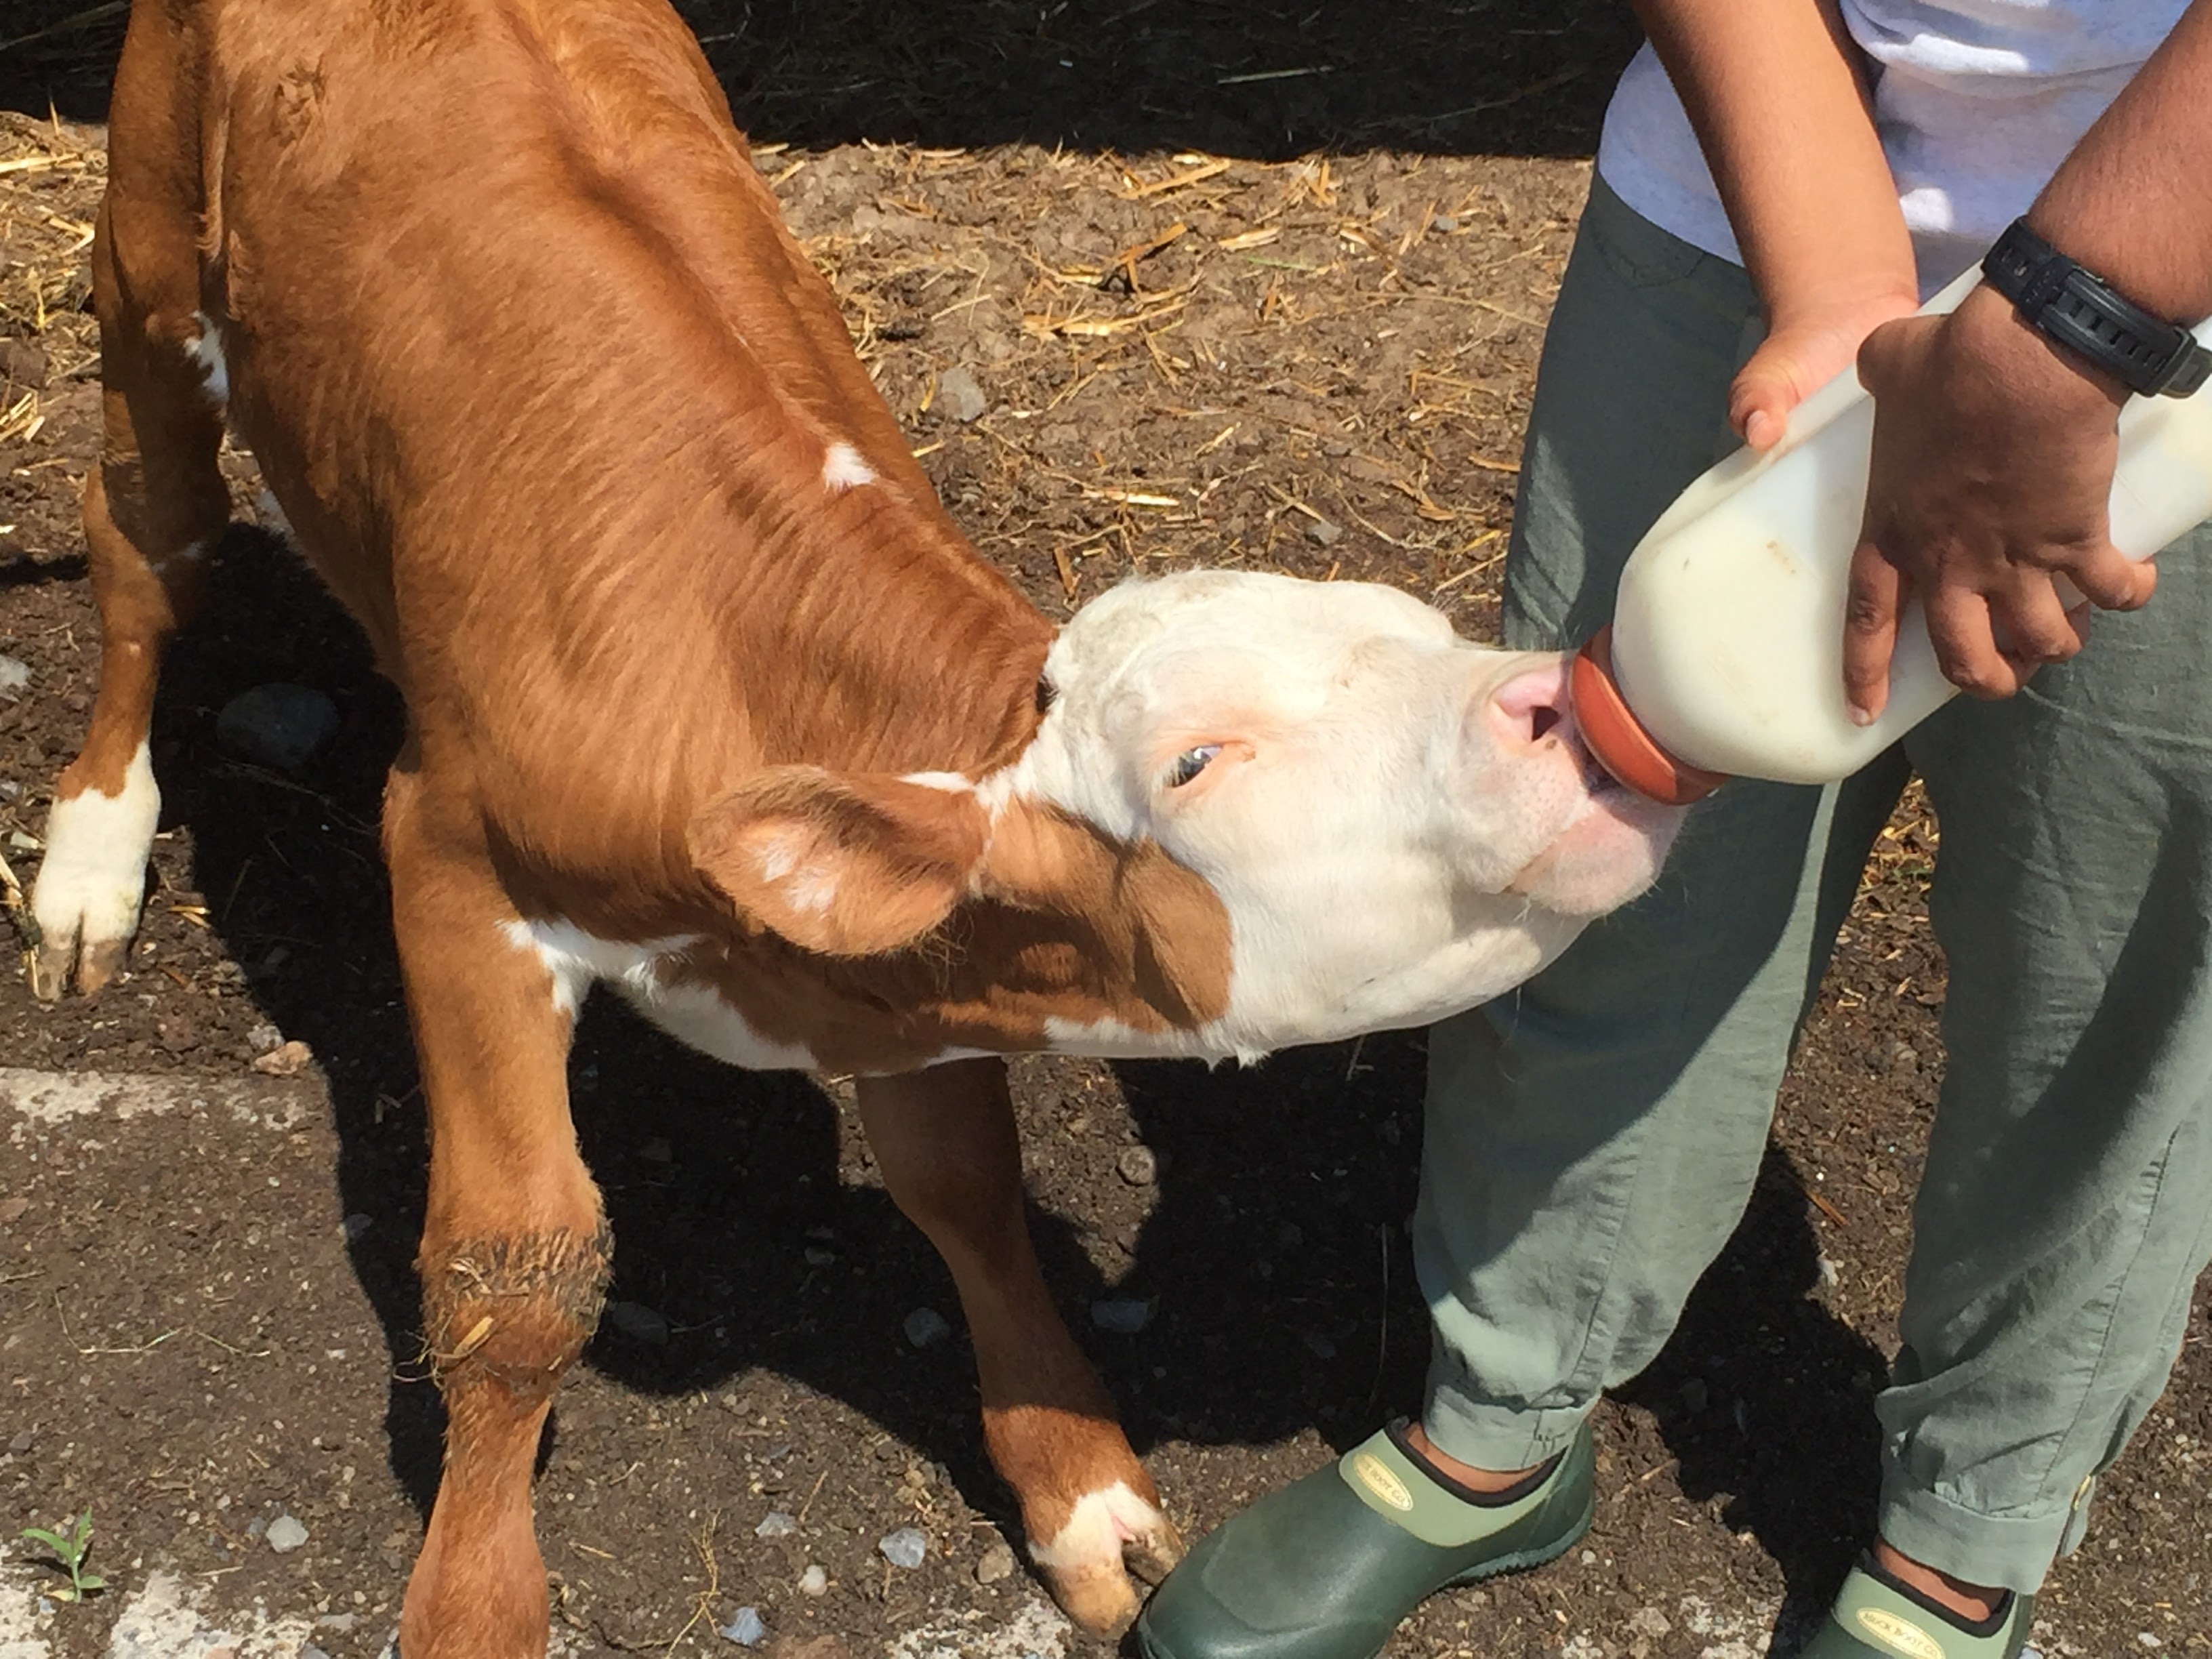 Man getting blowjob by a calf